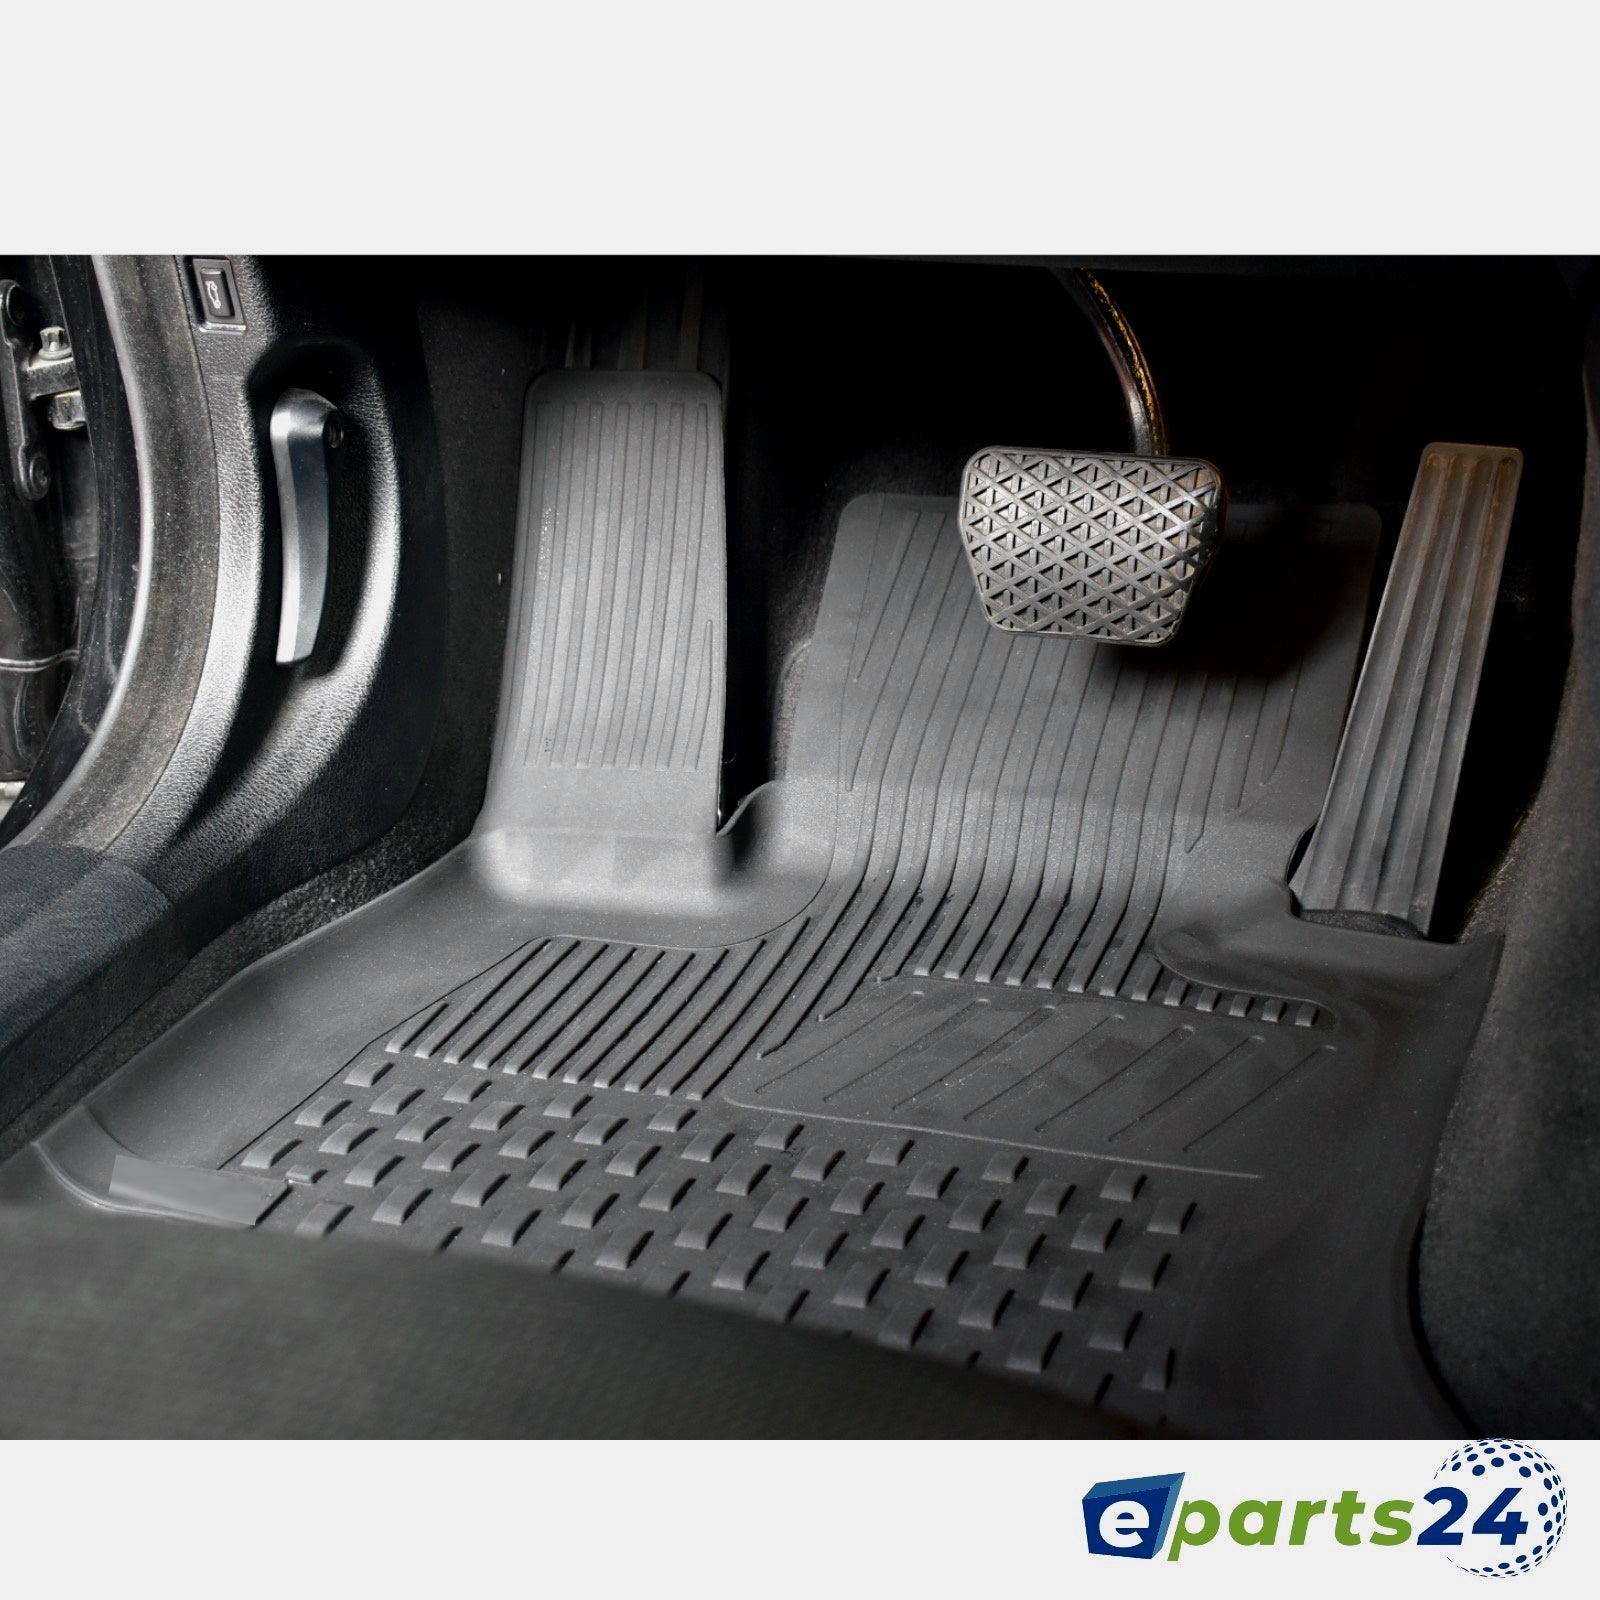 Fußmatten F10 BMW F11 Premium für – Touring TPE 5tlg 5er Limo E-Parts24 Automatten